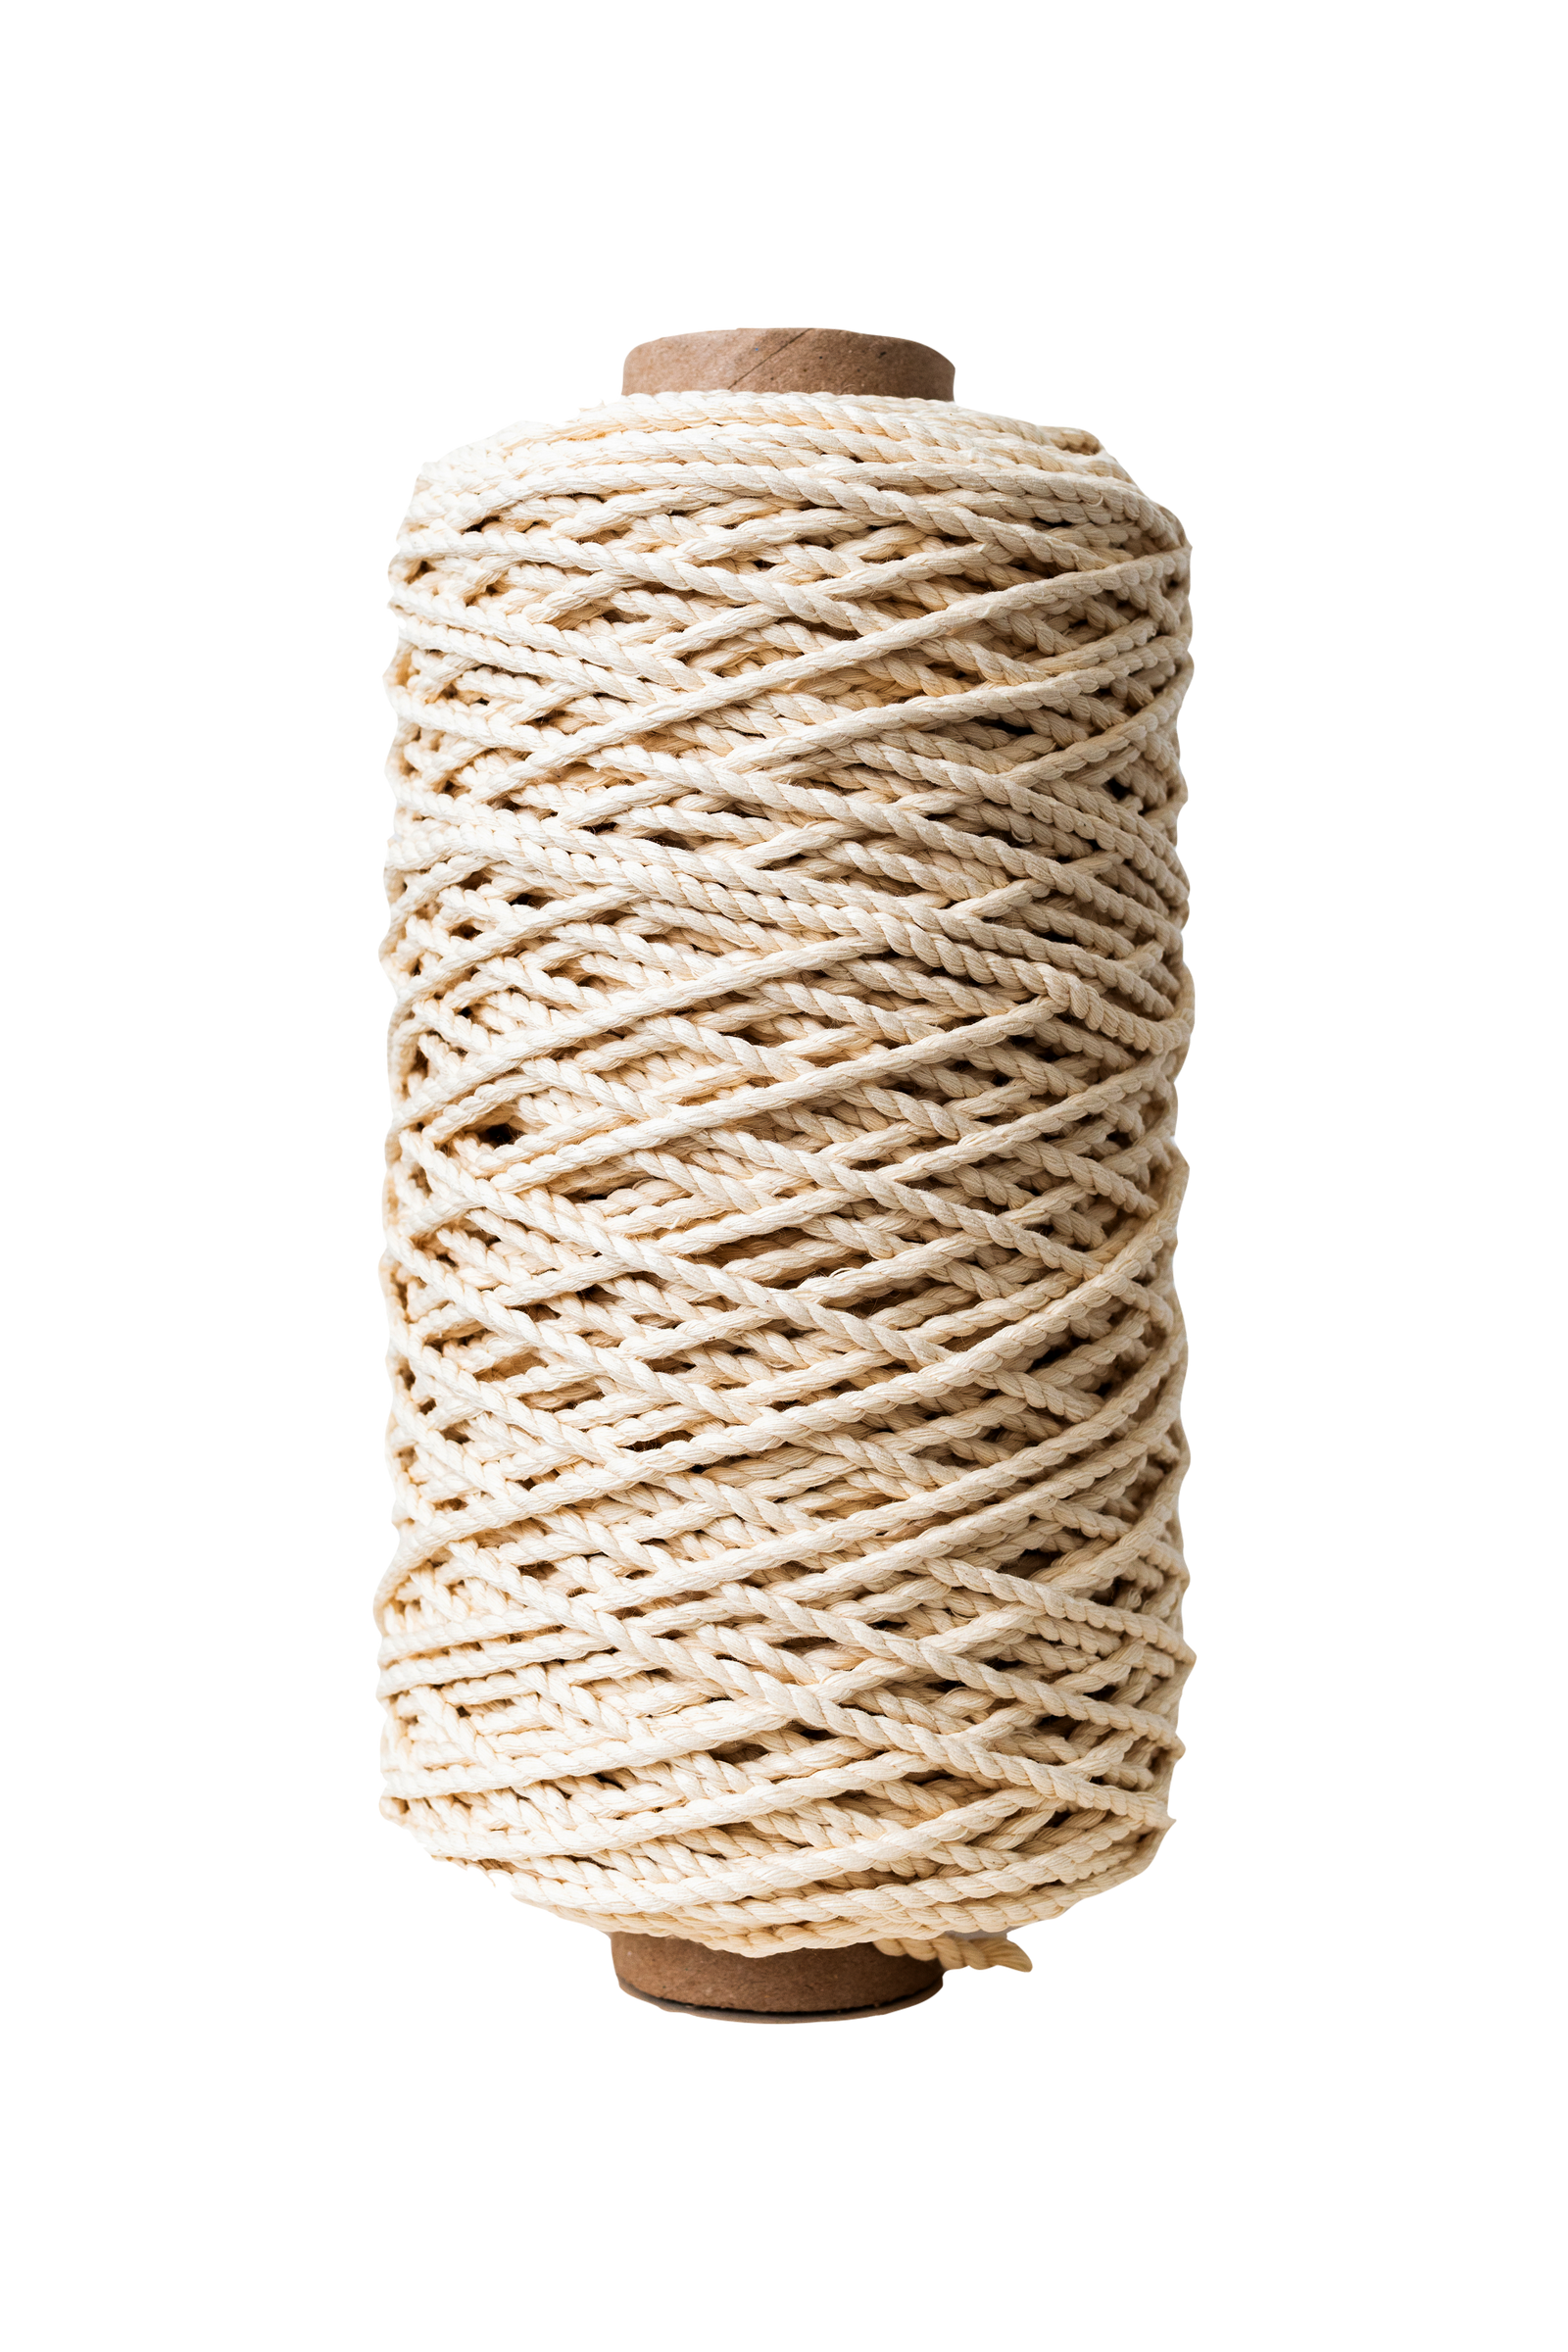 Smeren logboek Spanning Twisted Cotton Rope | Oeko-Tex Certified 100% Cotton | Macrame Rope Tagged " 3mm" - MangoAndMore